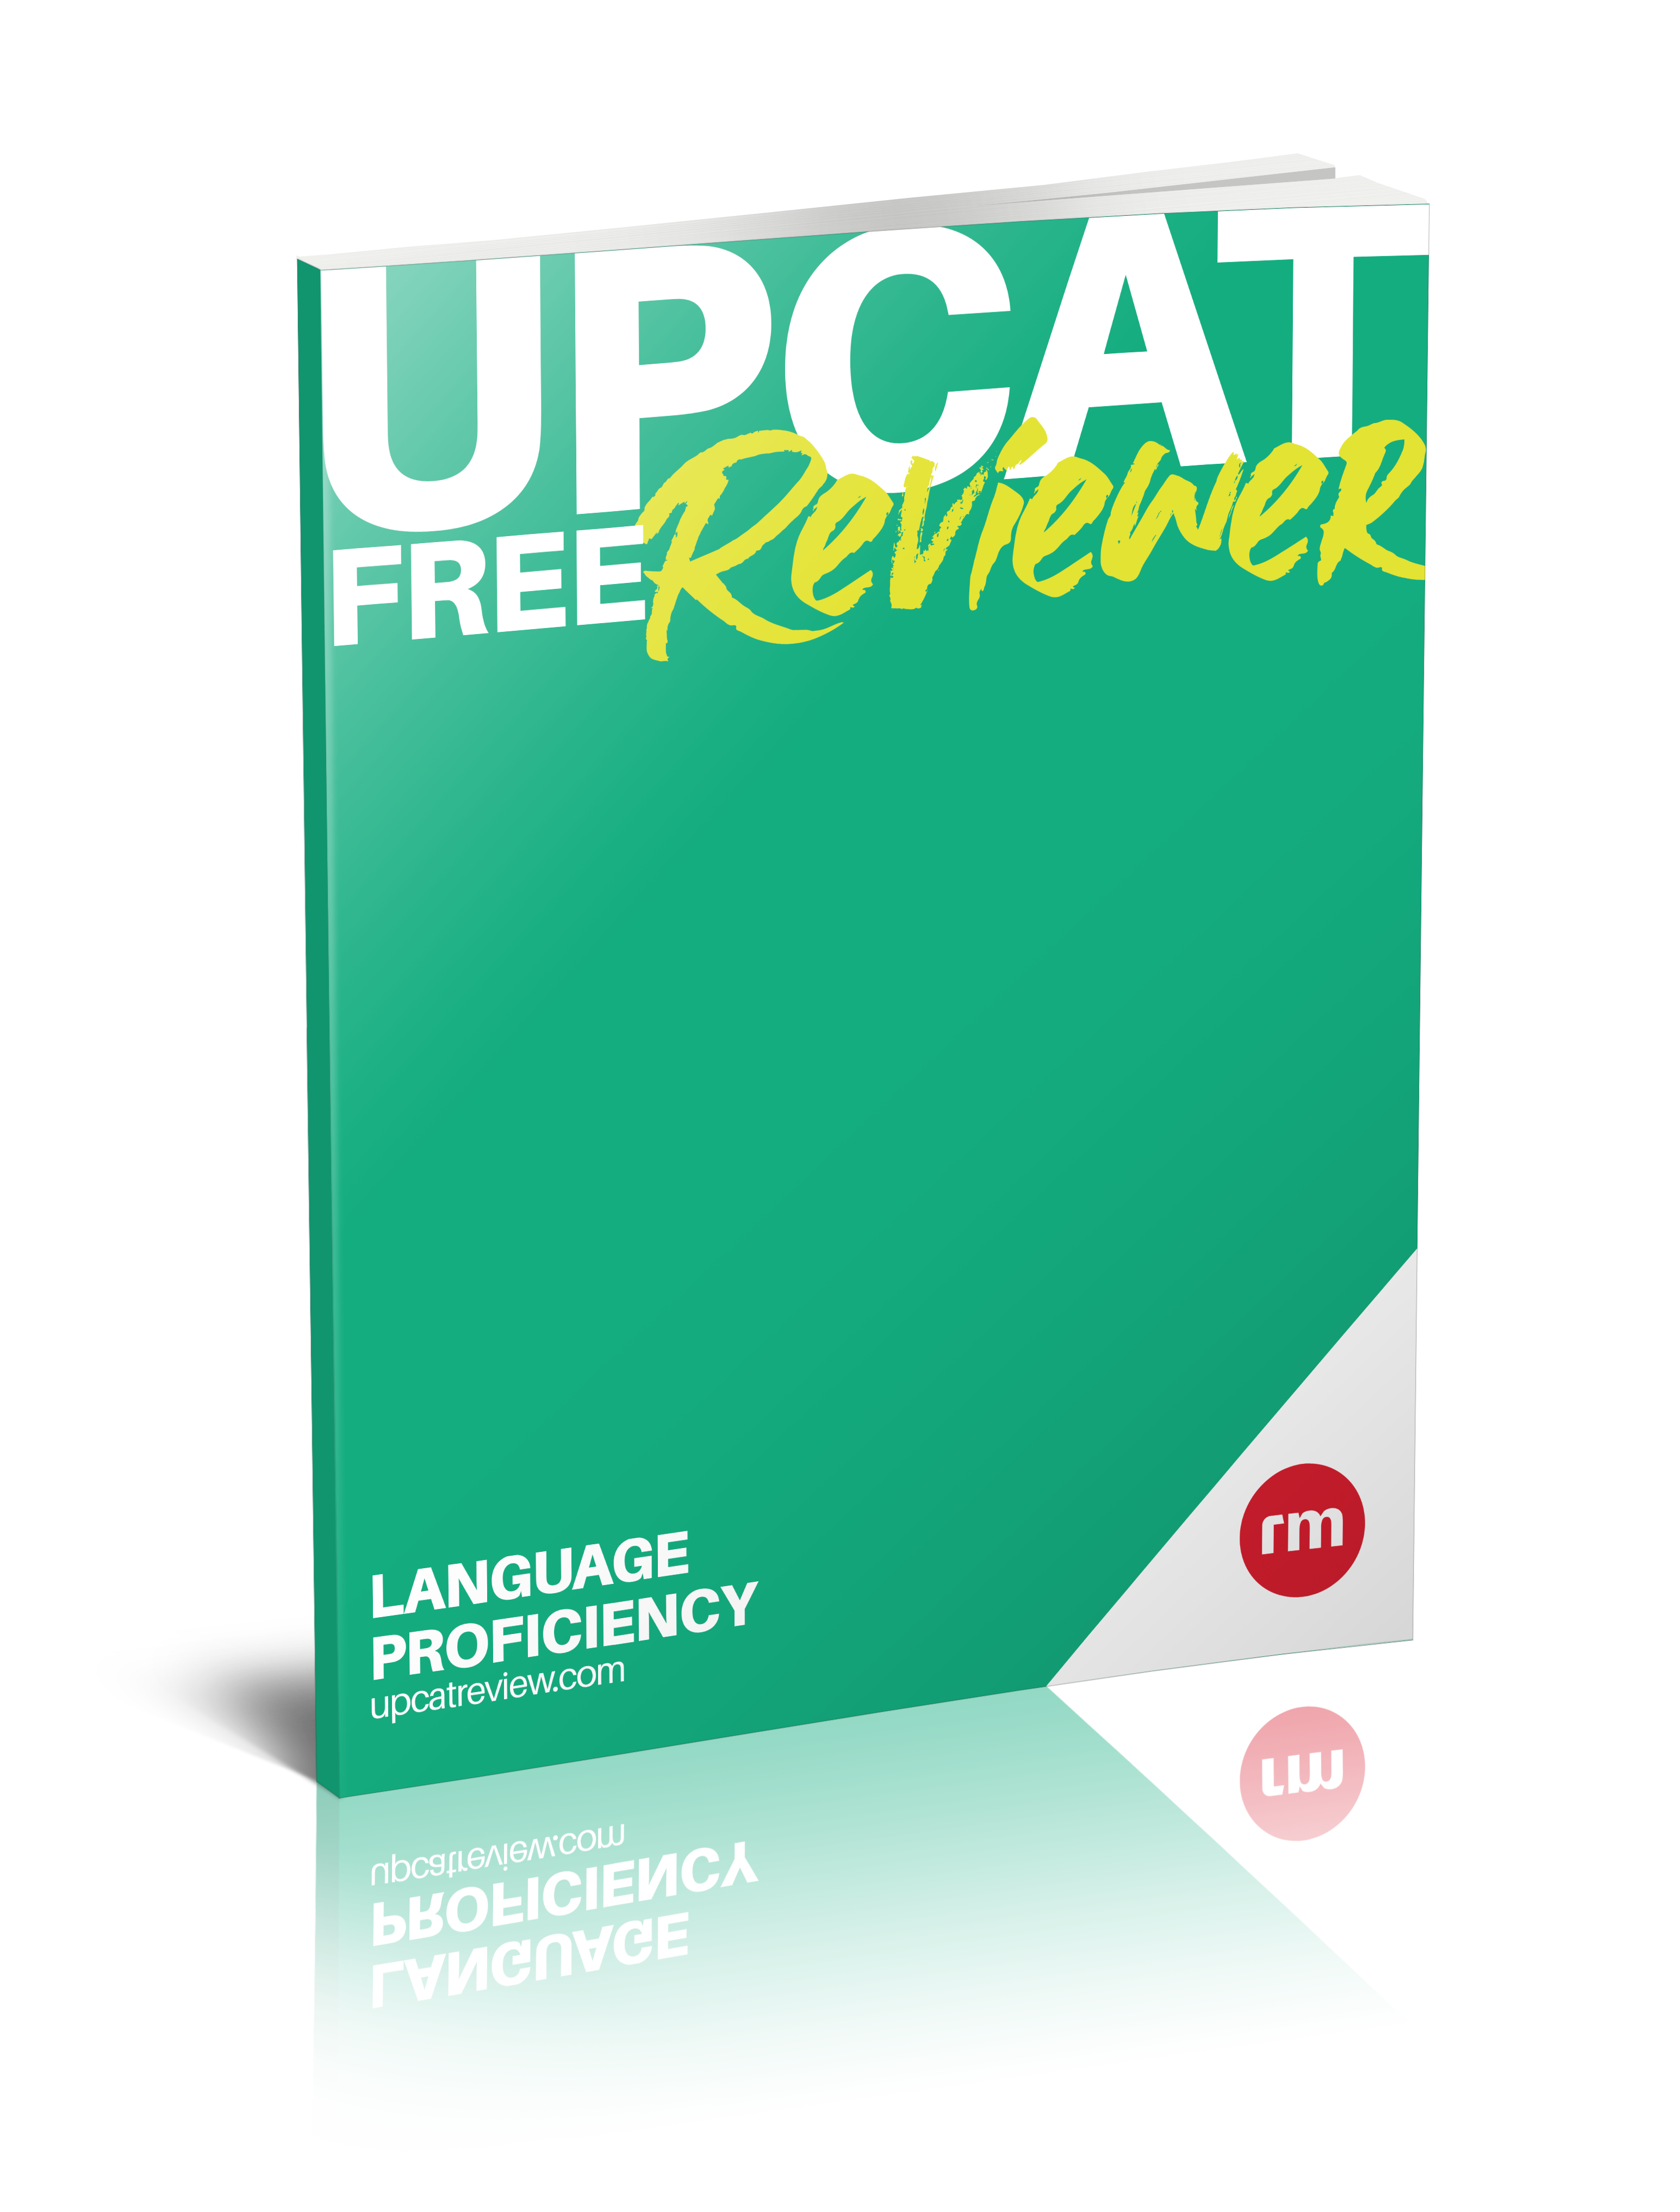 UPCAT Reviewer - Language Proficiency